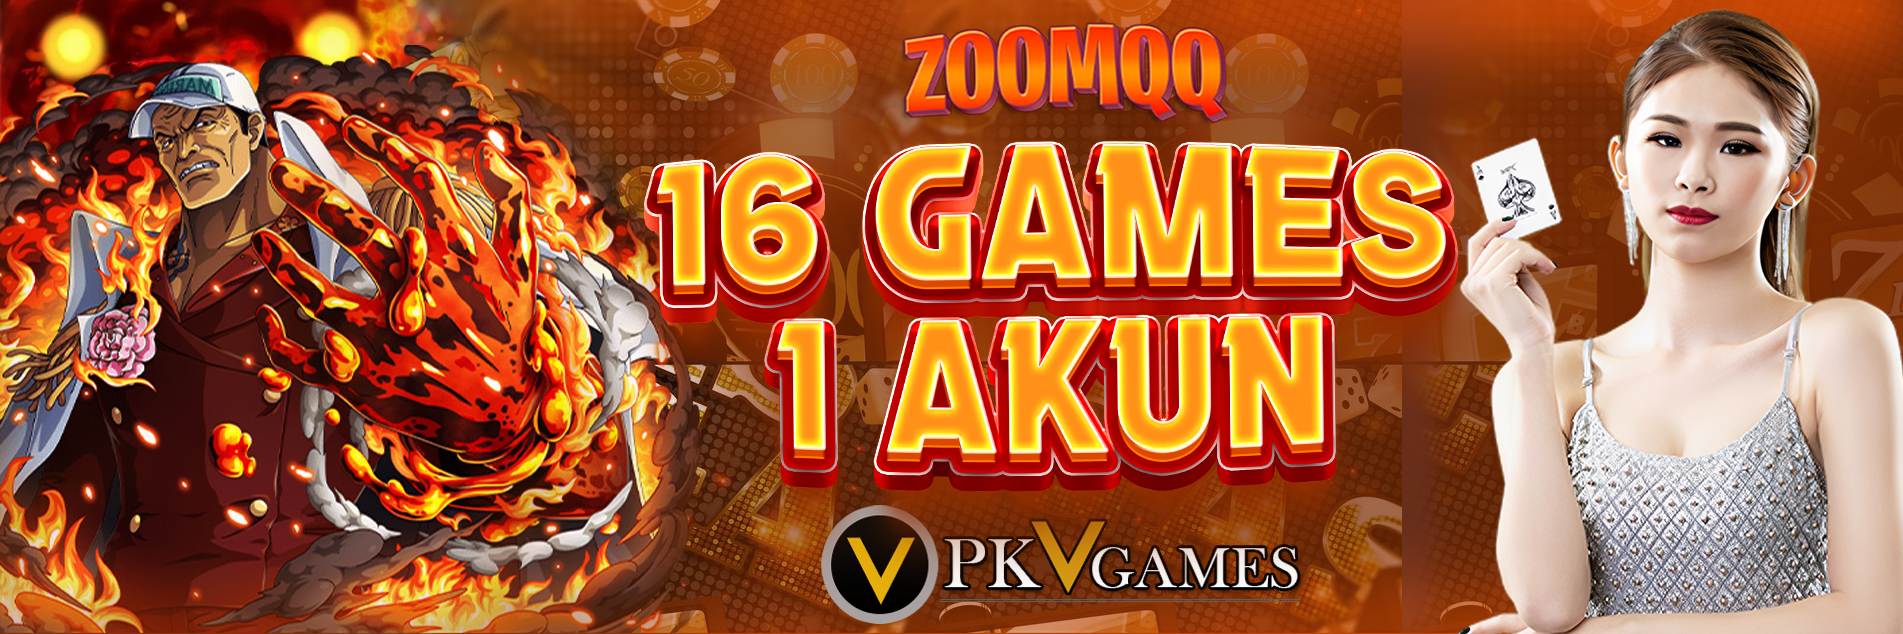 ZoomQQ Penyedia Poker Pkv Gaming